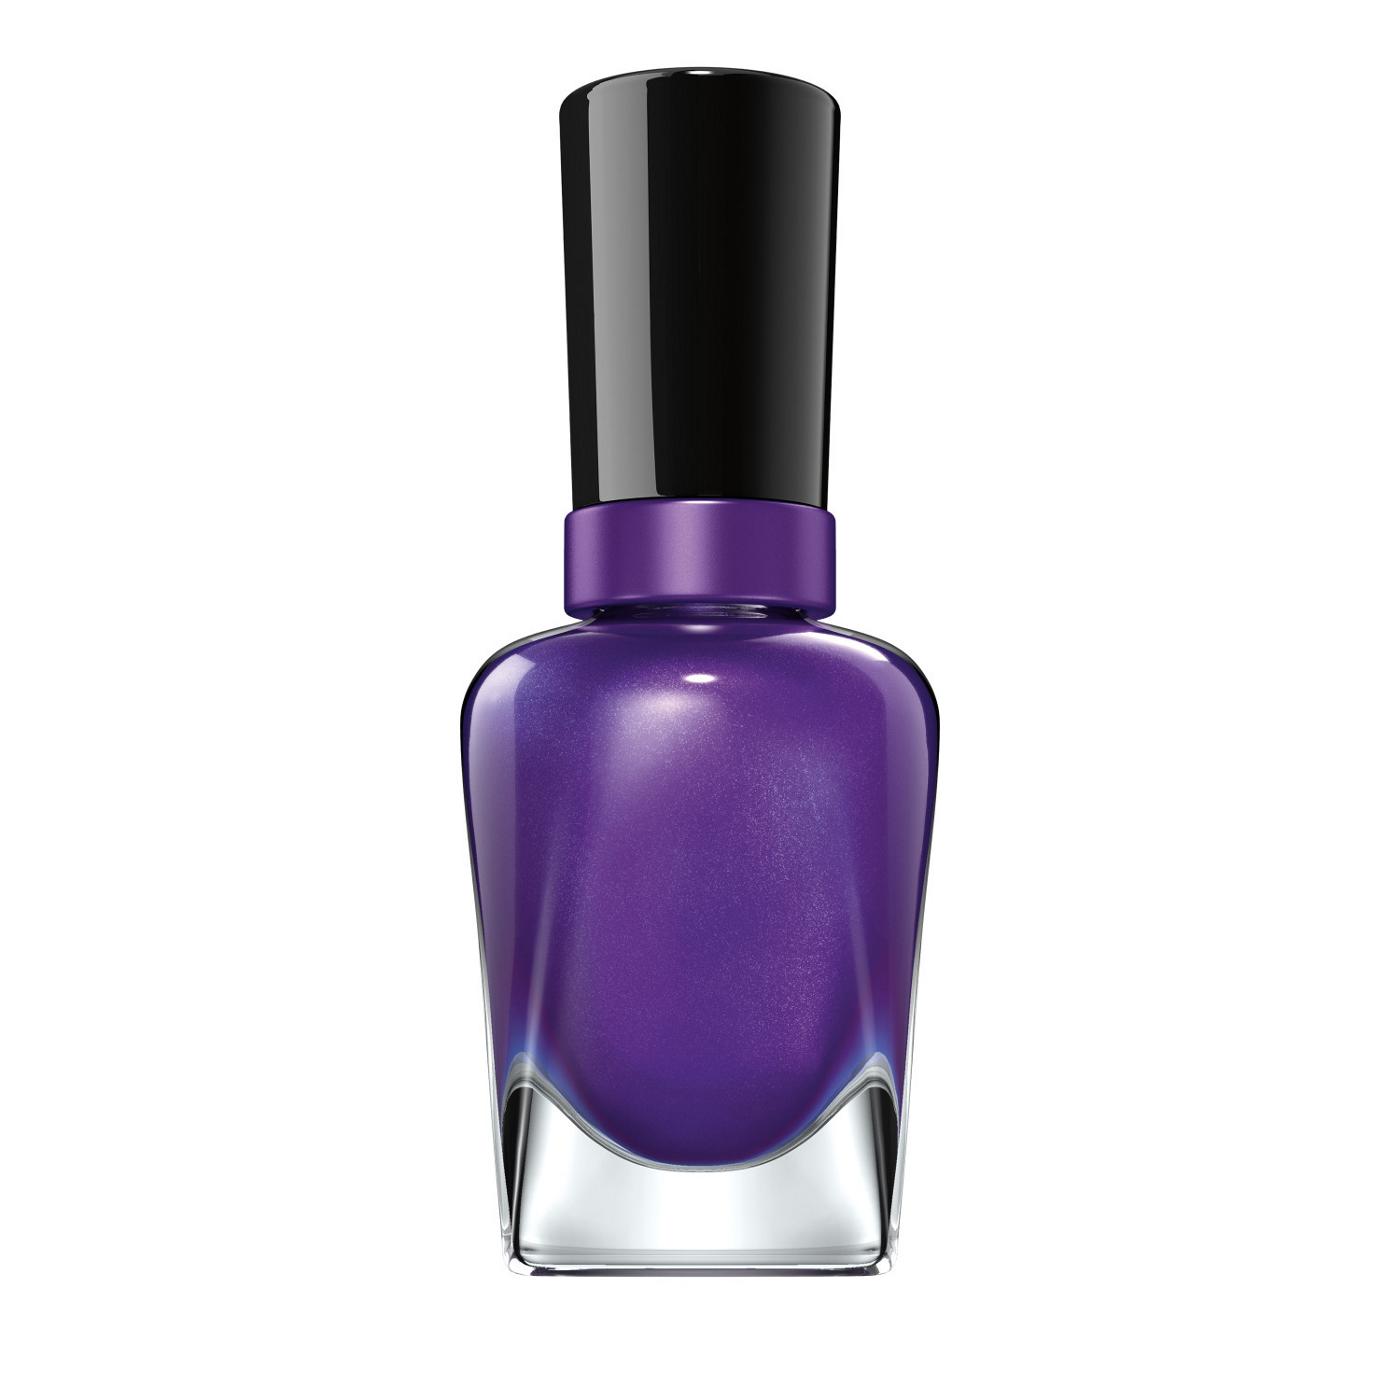 Sally Hansen Miracle Gel Nail Polish - Purplexed; image 2 of 6